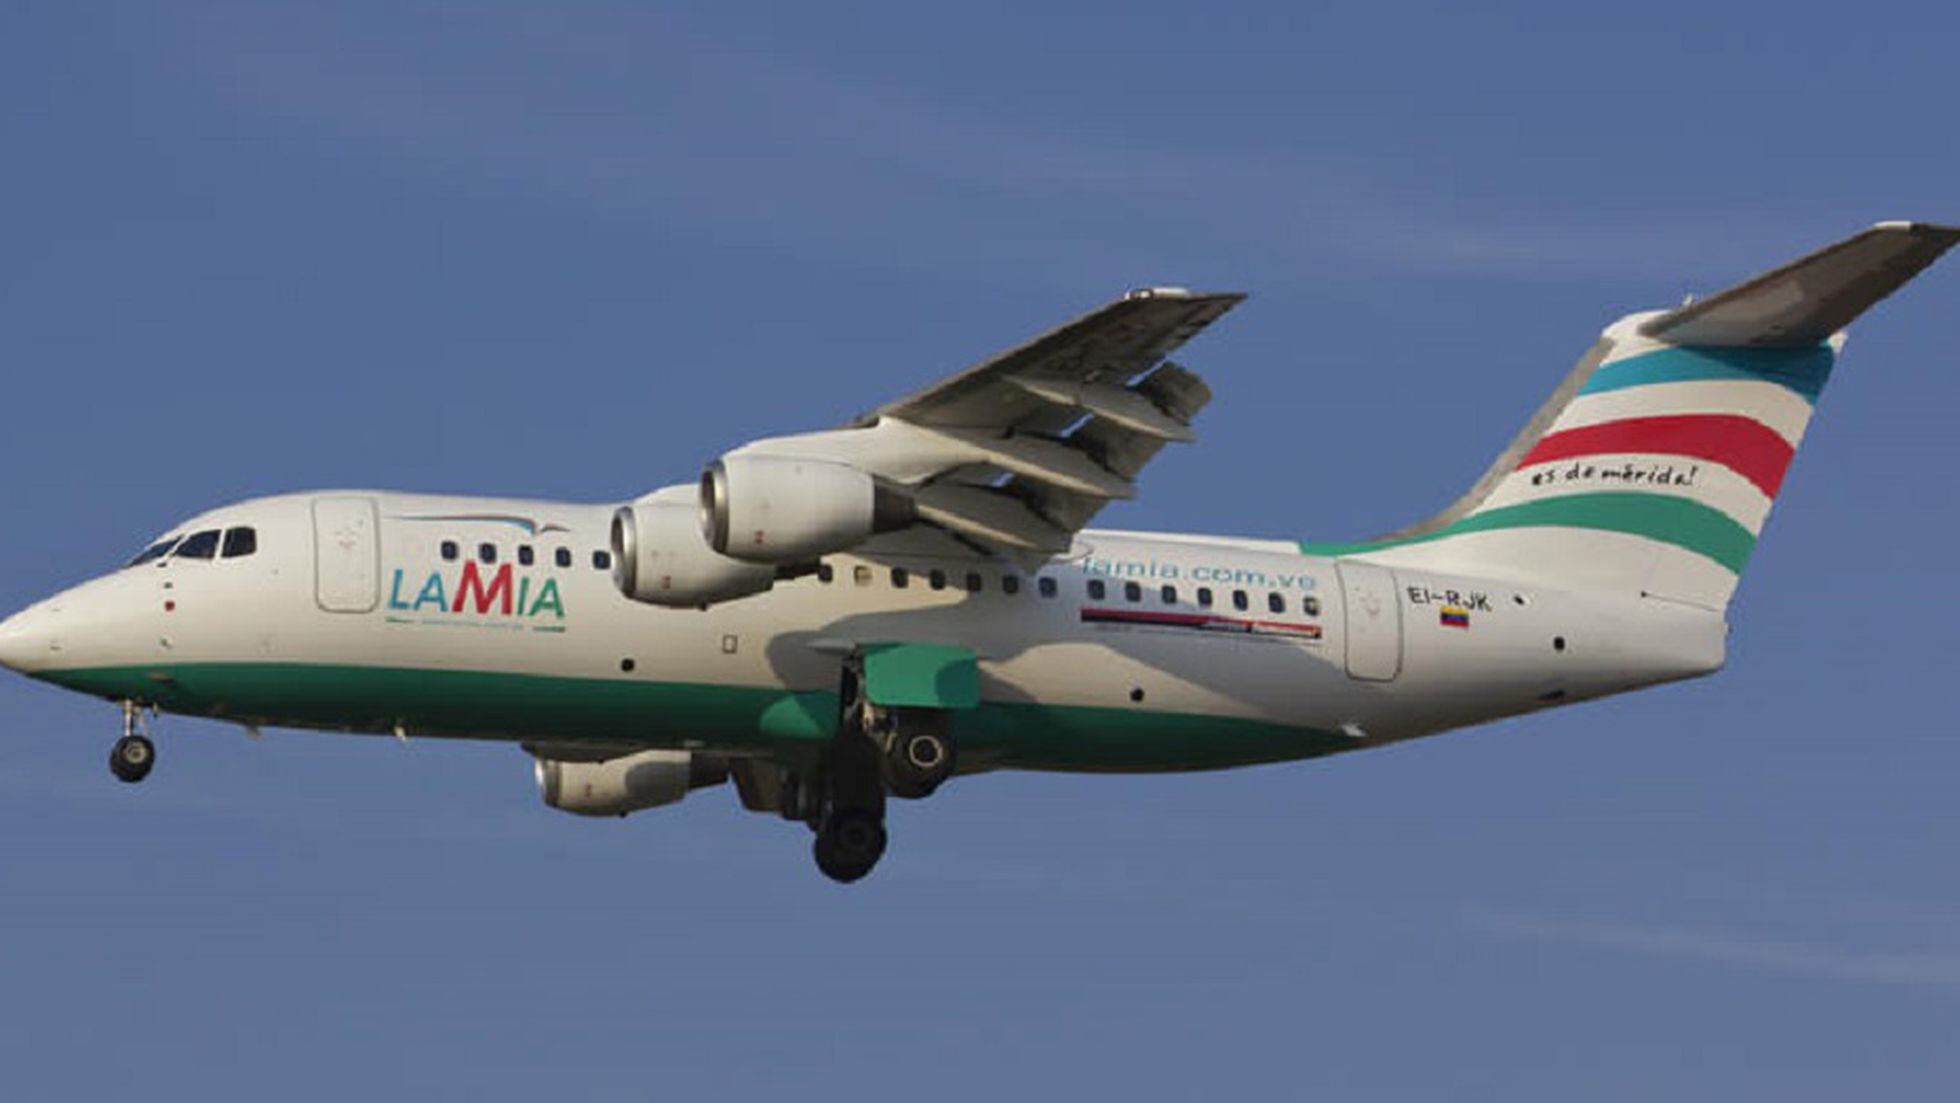 Lamia, a companhia aérea que transportava a Chapecoense, Internacional